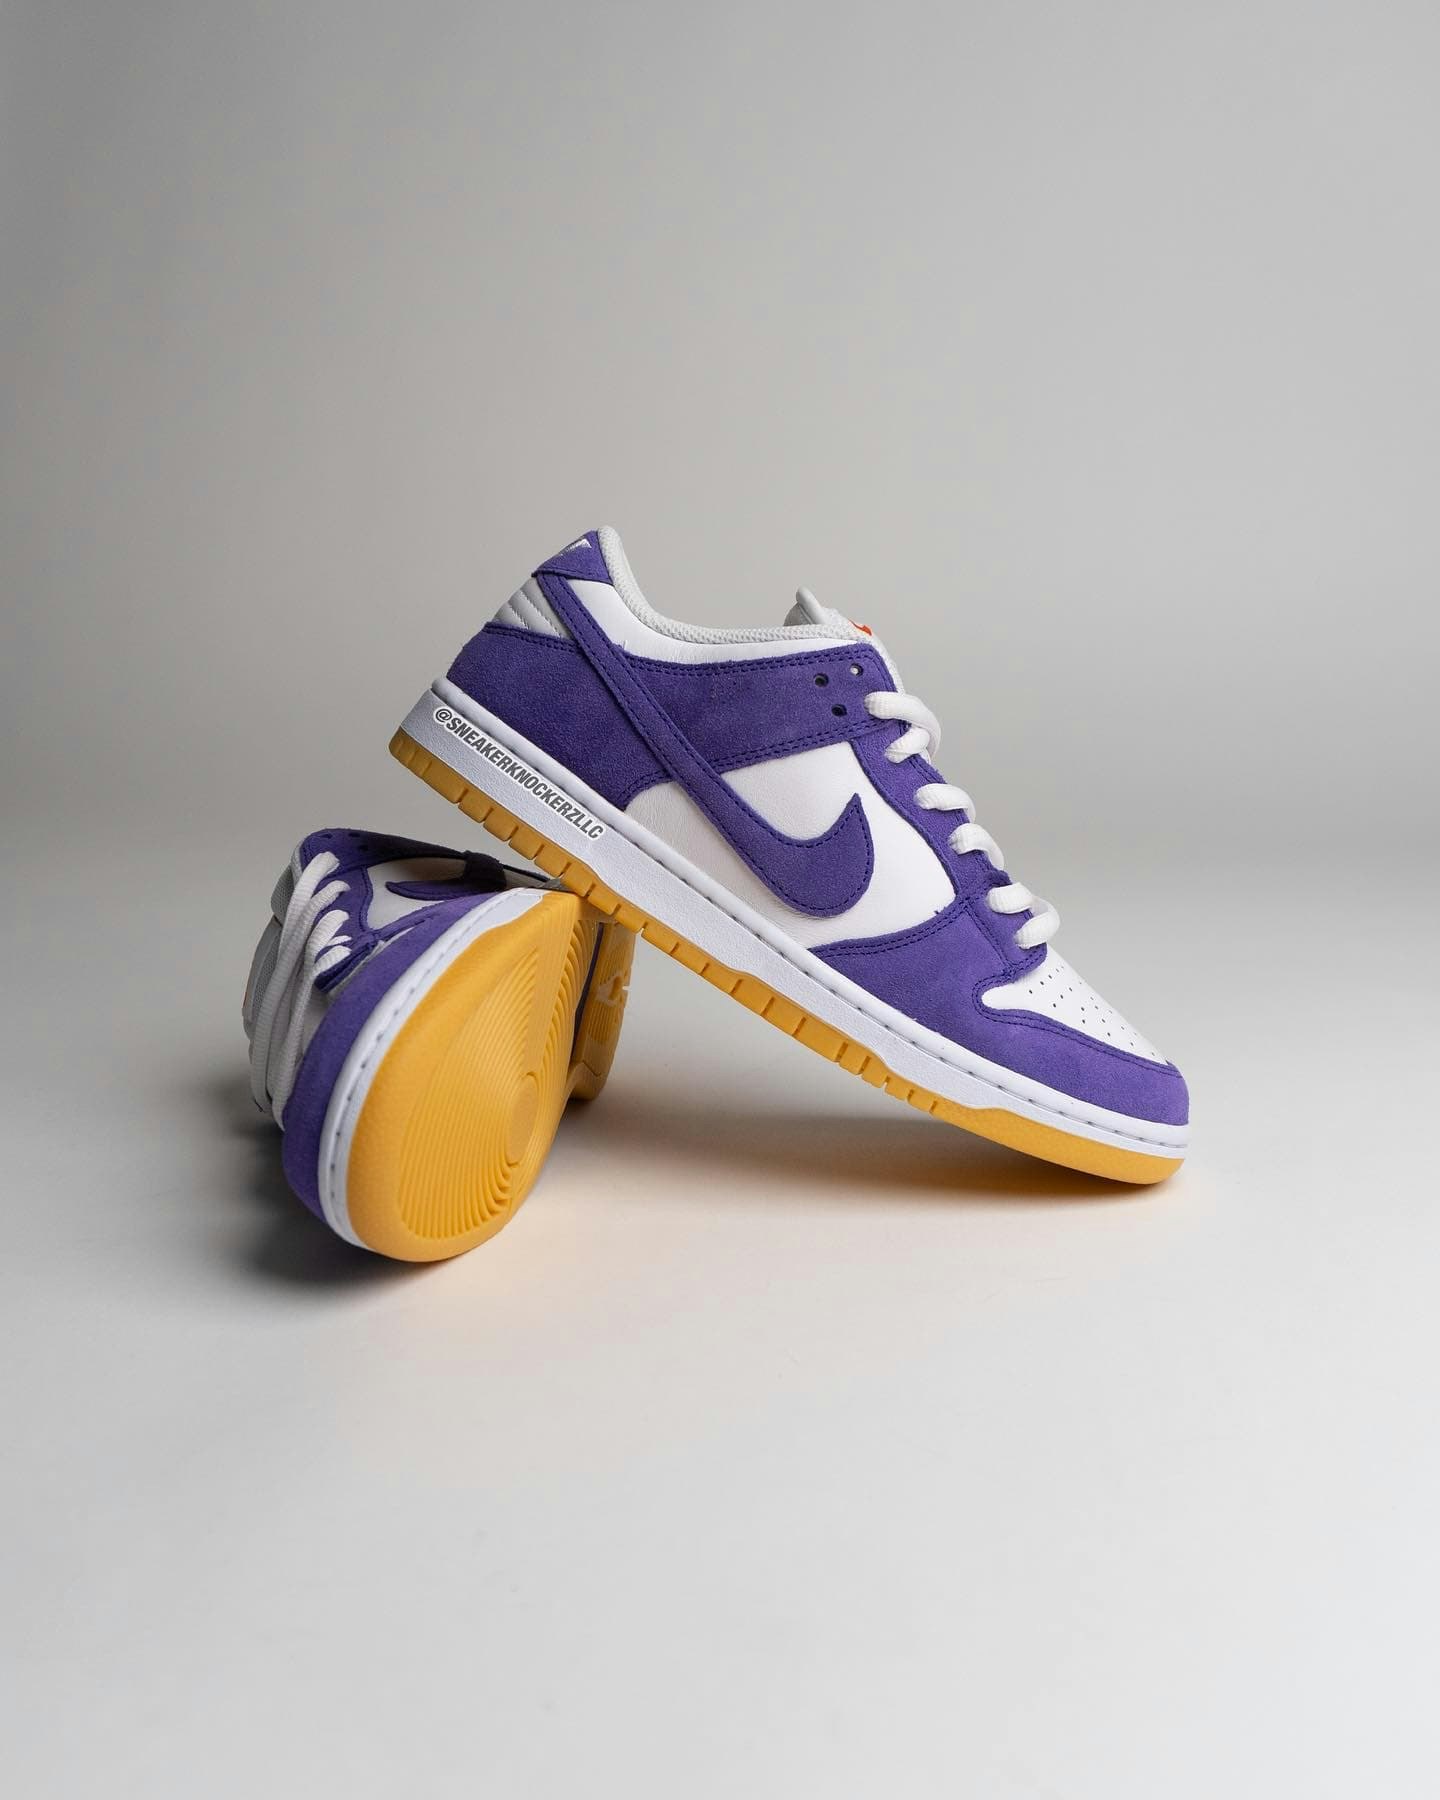 Nike SB Dunk Low "Purple Suede"